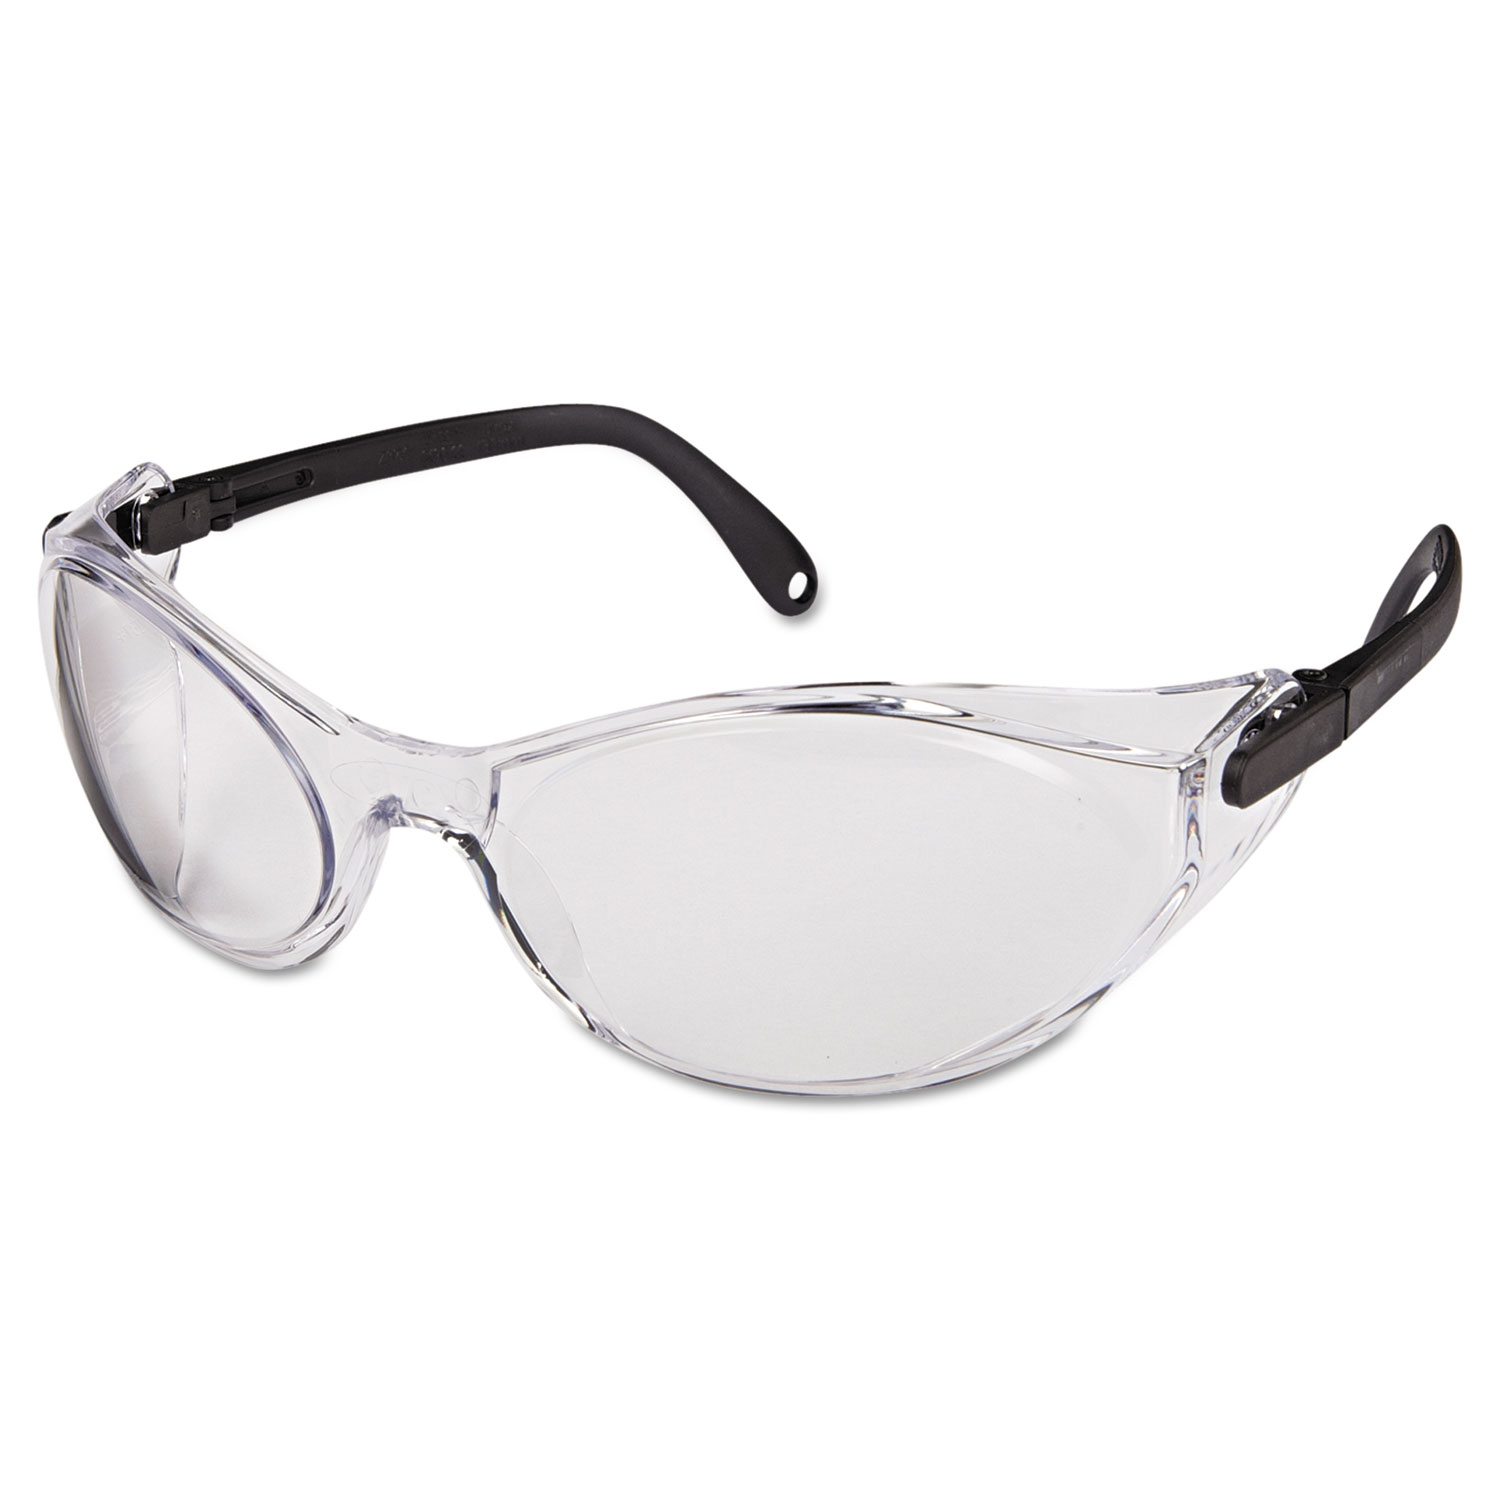 Bandido Safety Eyewear, Frameless, Clear Lens, Nylon/Polycarbonate